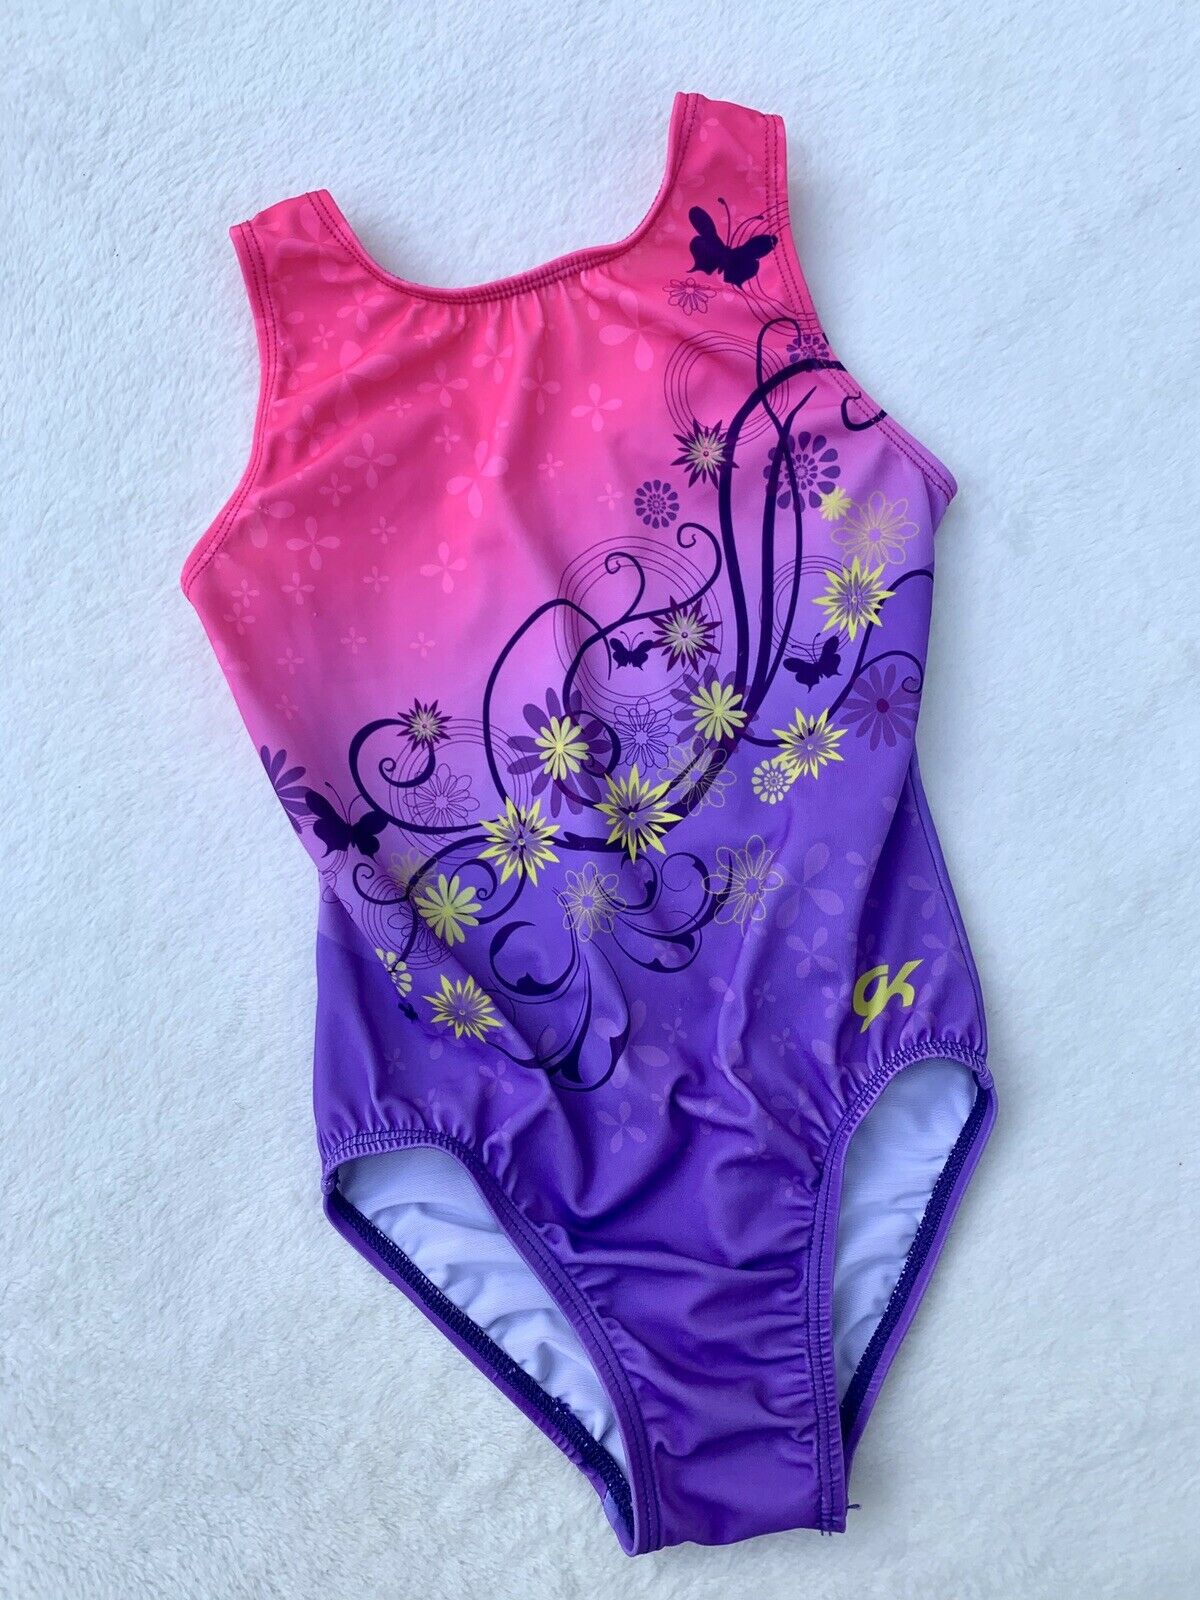 Gk Elite Leotard Gymnastics Pink Purple Butterfly Daisy Tank Leo Dance Size: Cm